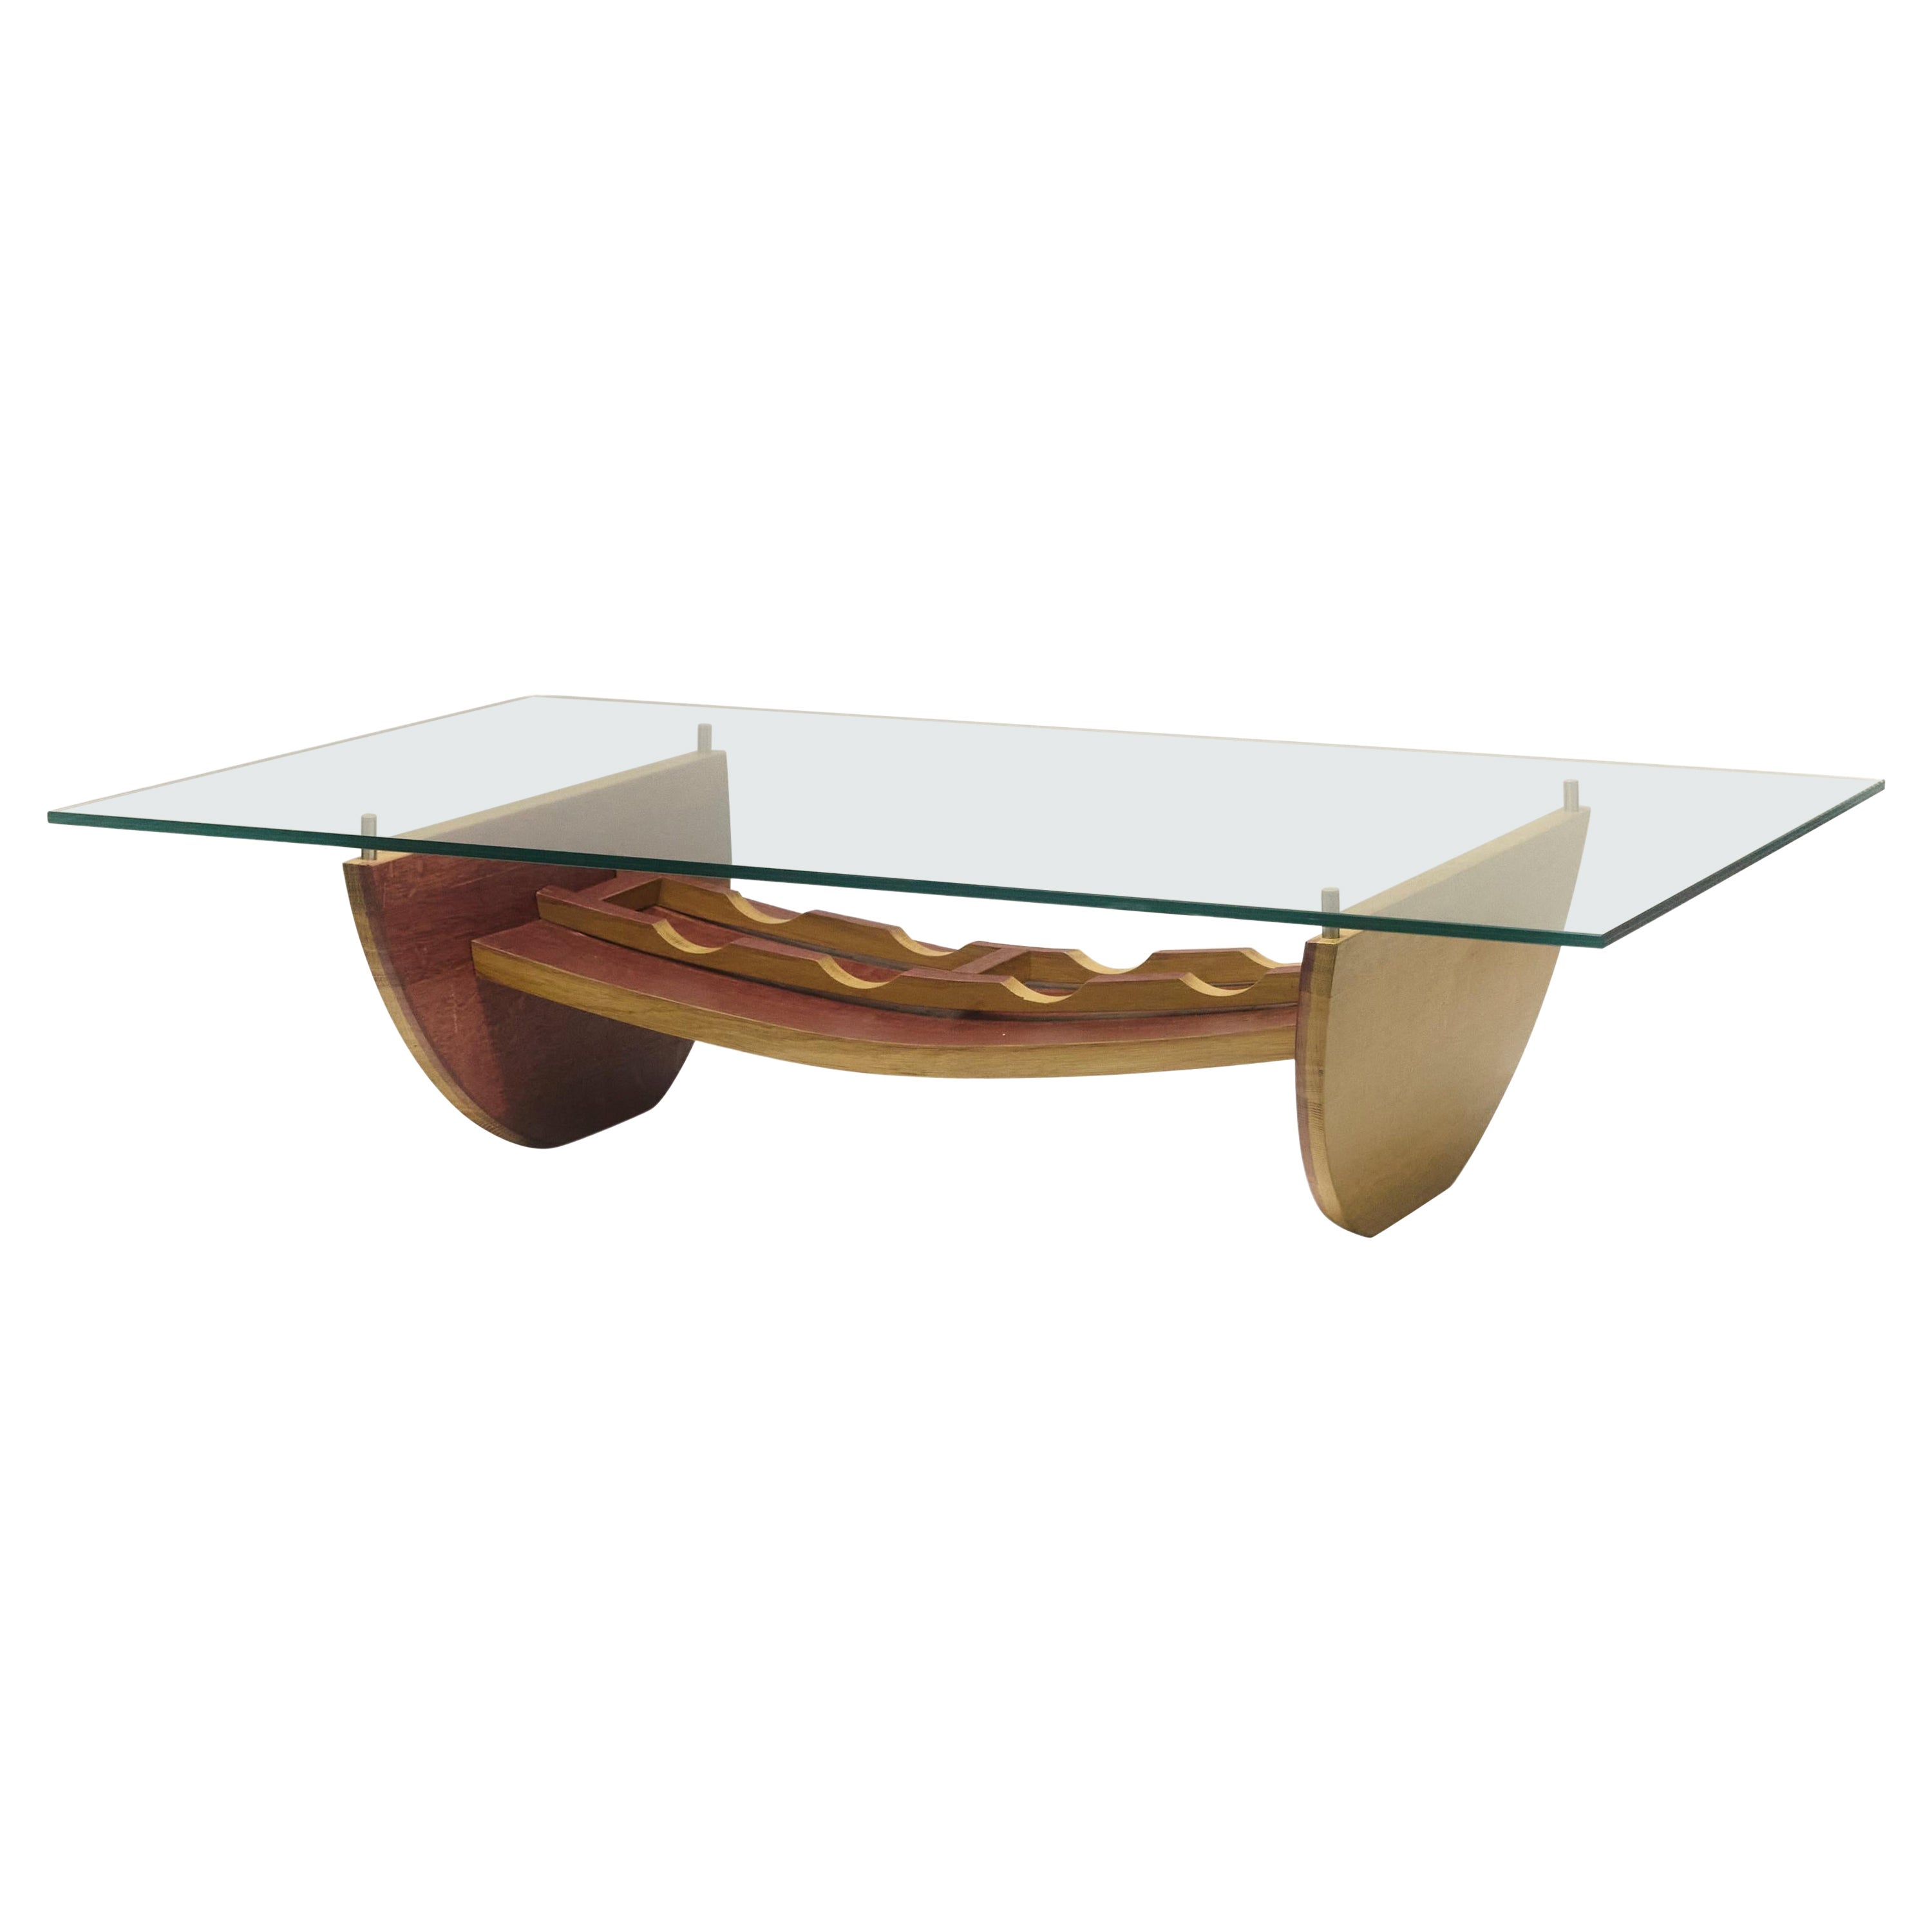 CARSON Solid Wood Rustic Handmade Custom Built Bespoke Desk Top